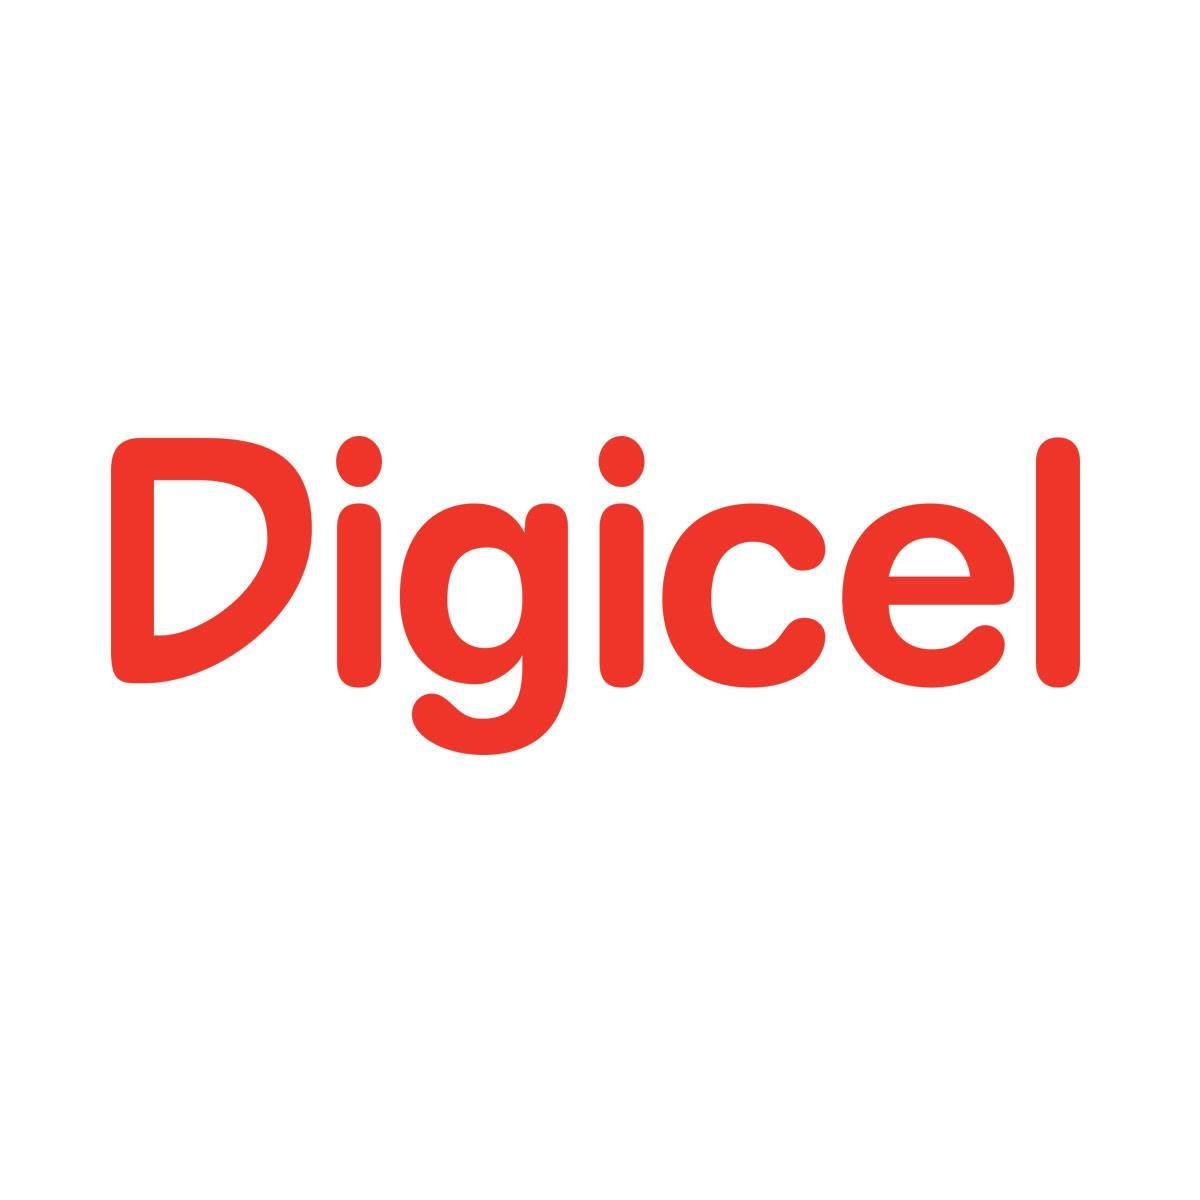 Digicel Experience Store Associate Vacancy, Digicel Vacancies September 2020, Digicel Customer Care Agent Vacancy, Digicel Vacancy August 2020,Digicel Vacancy July 2020